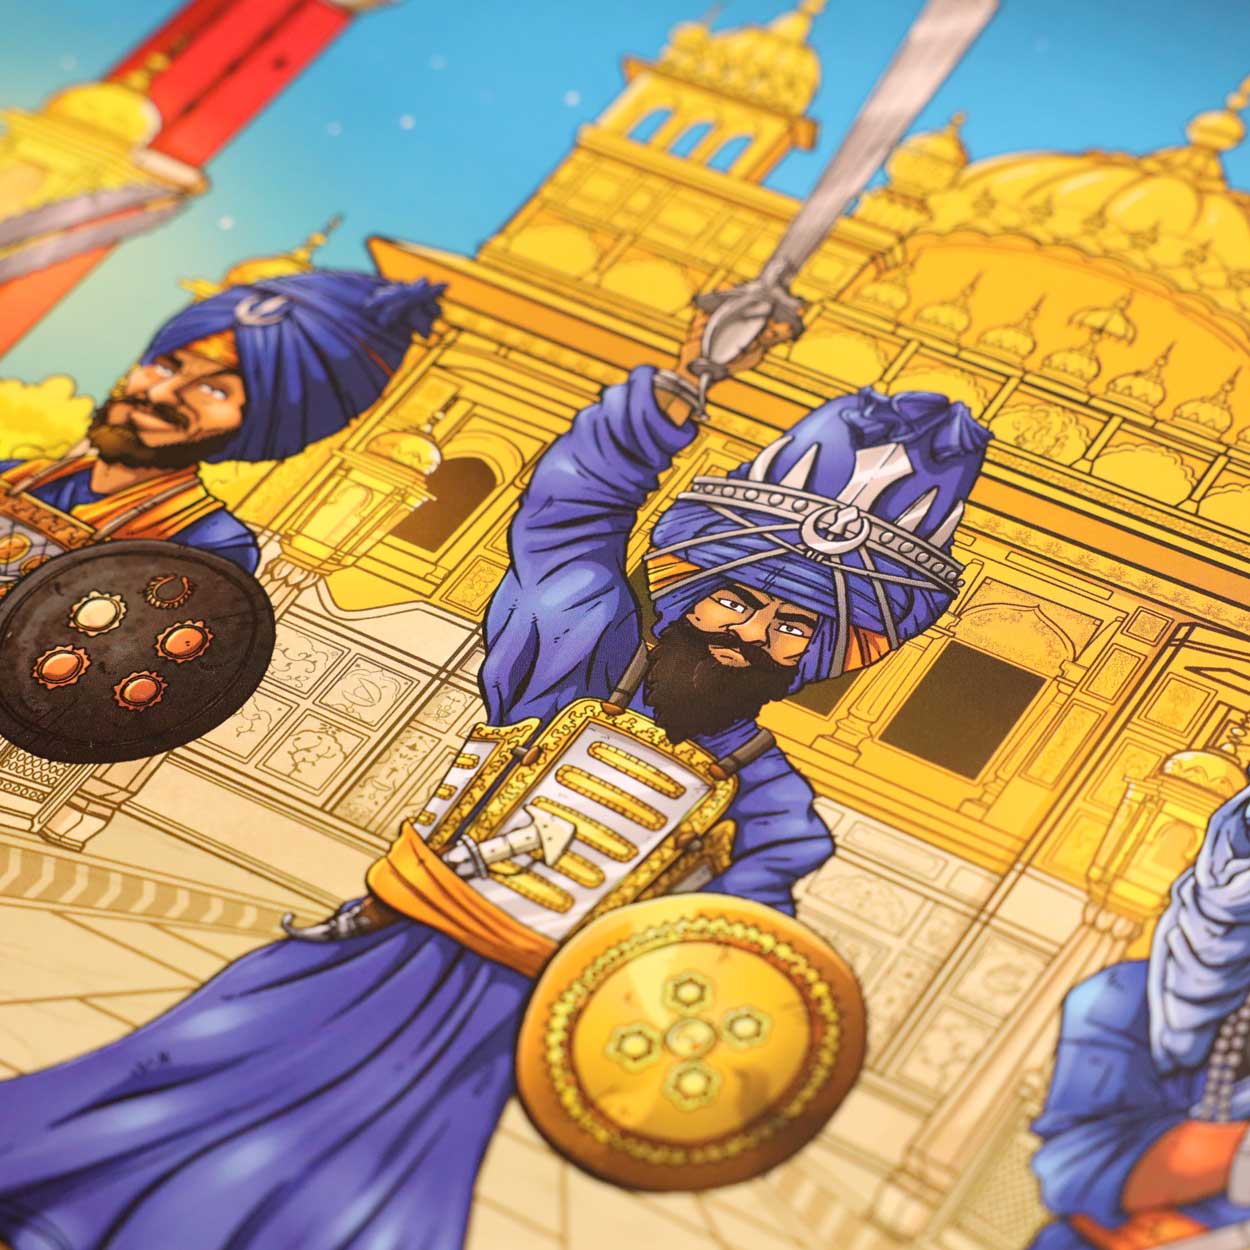 Darbar Sahib (Golden Temple) A3 Comic Art Poster